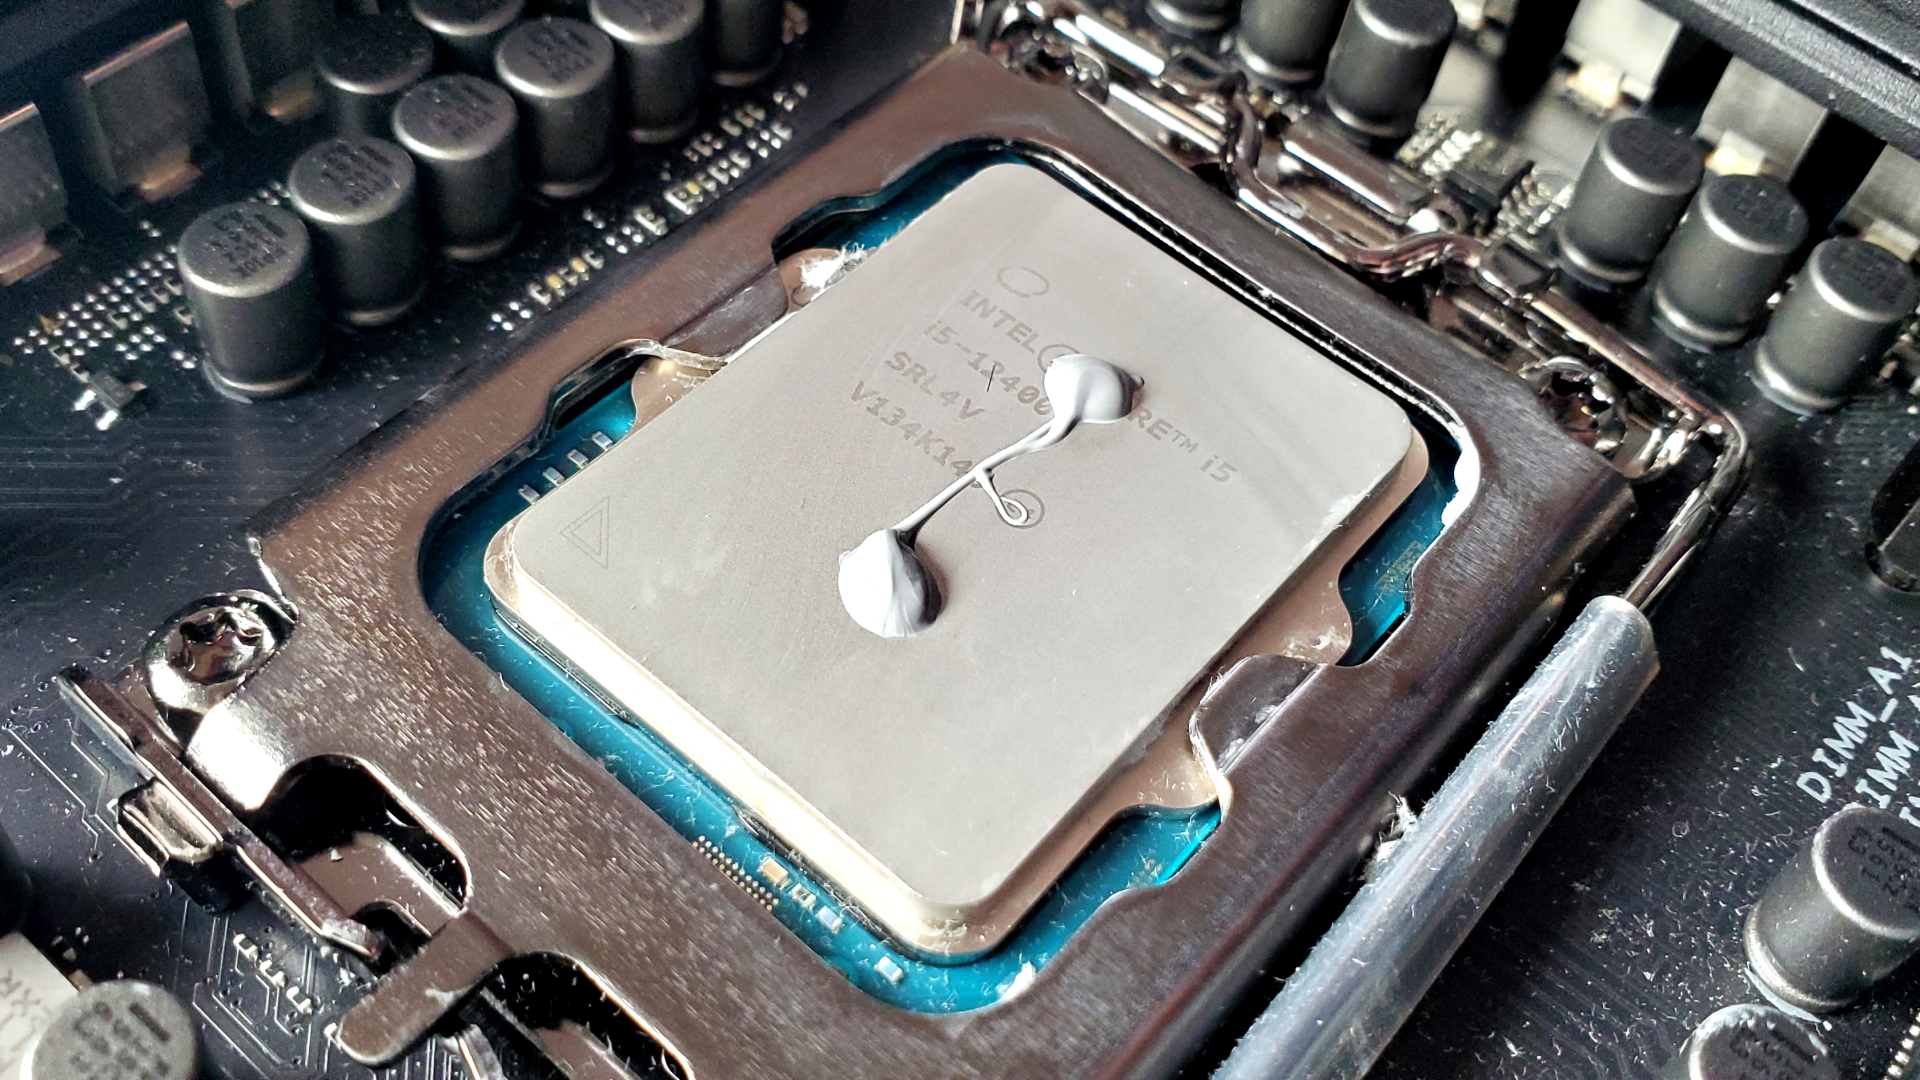 Thermal paste on CPU